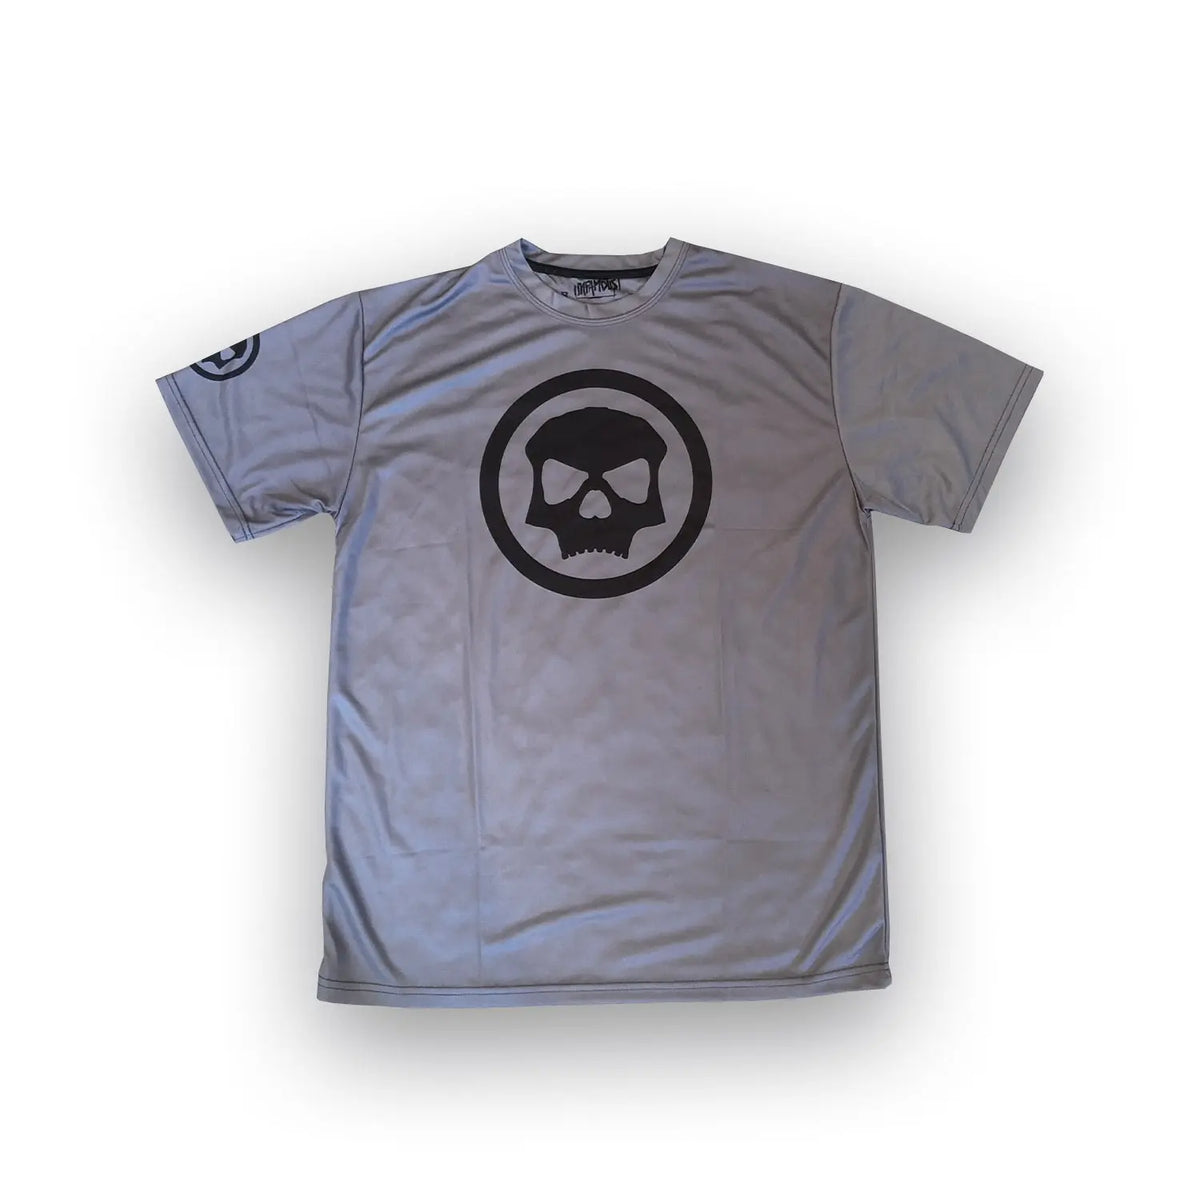 Infamous DryFit Tech T-Shirt - Loyalty Grey/Grey